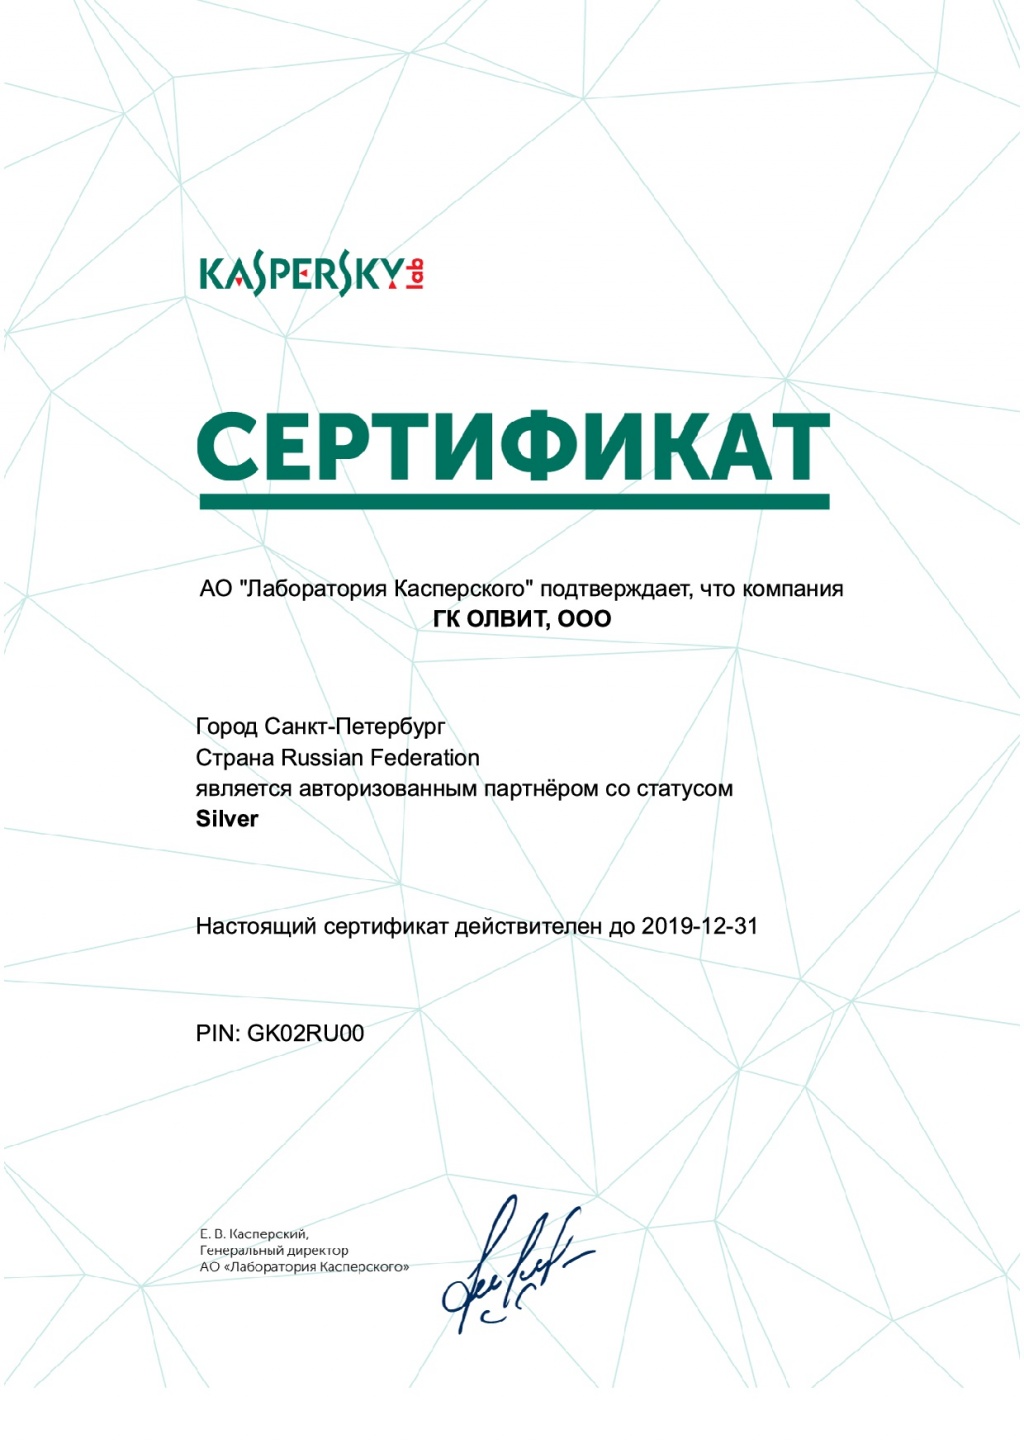 Kaspersky Silver Partner 2019